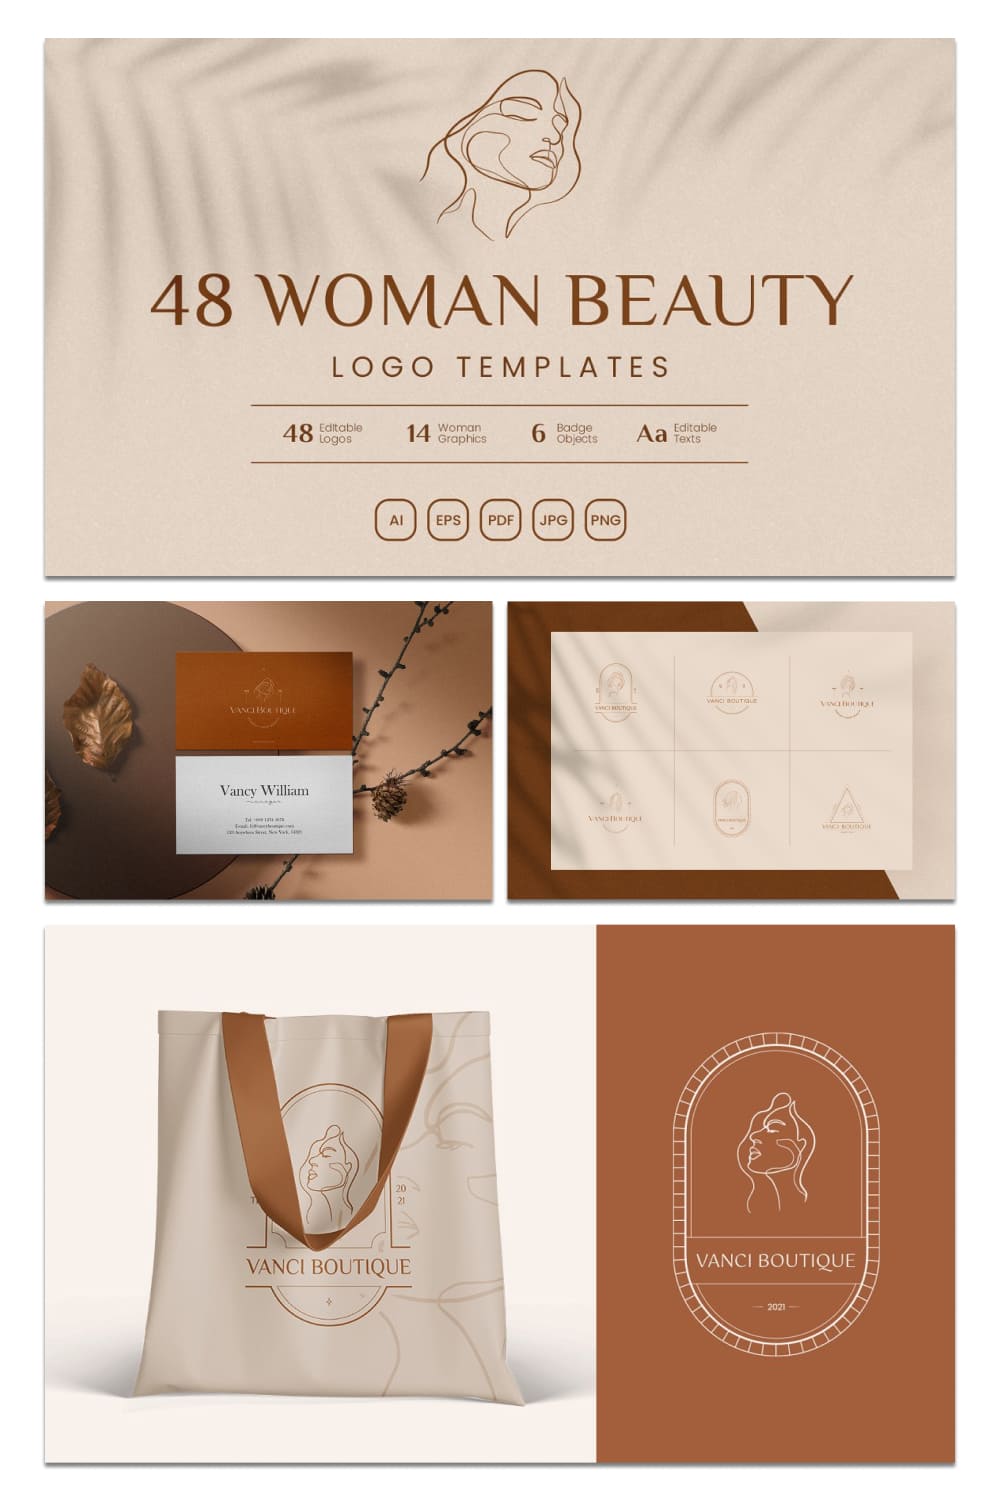 48 woman logo beauty graphics.